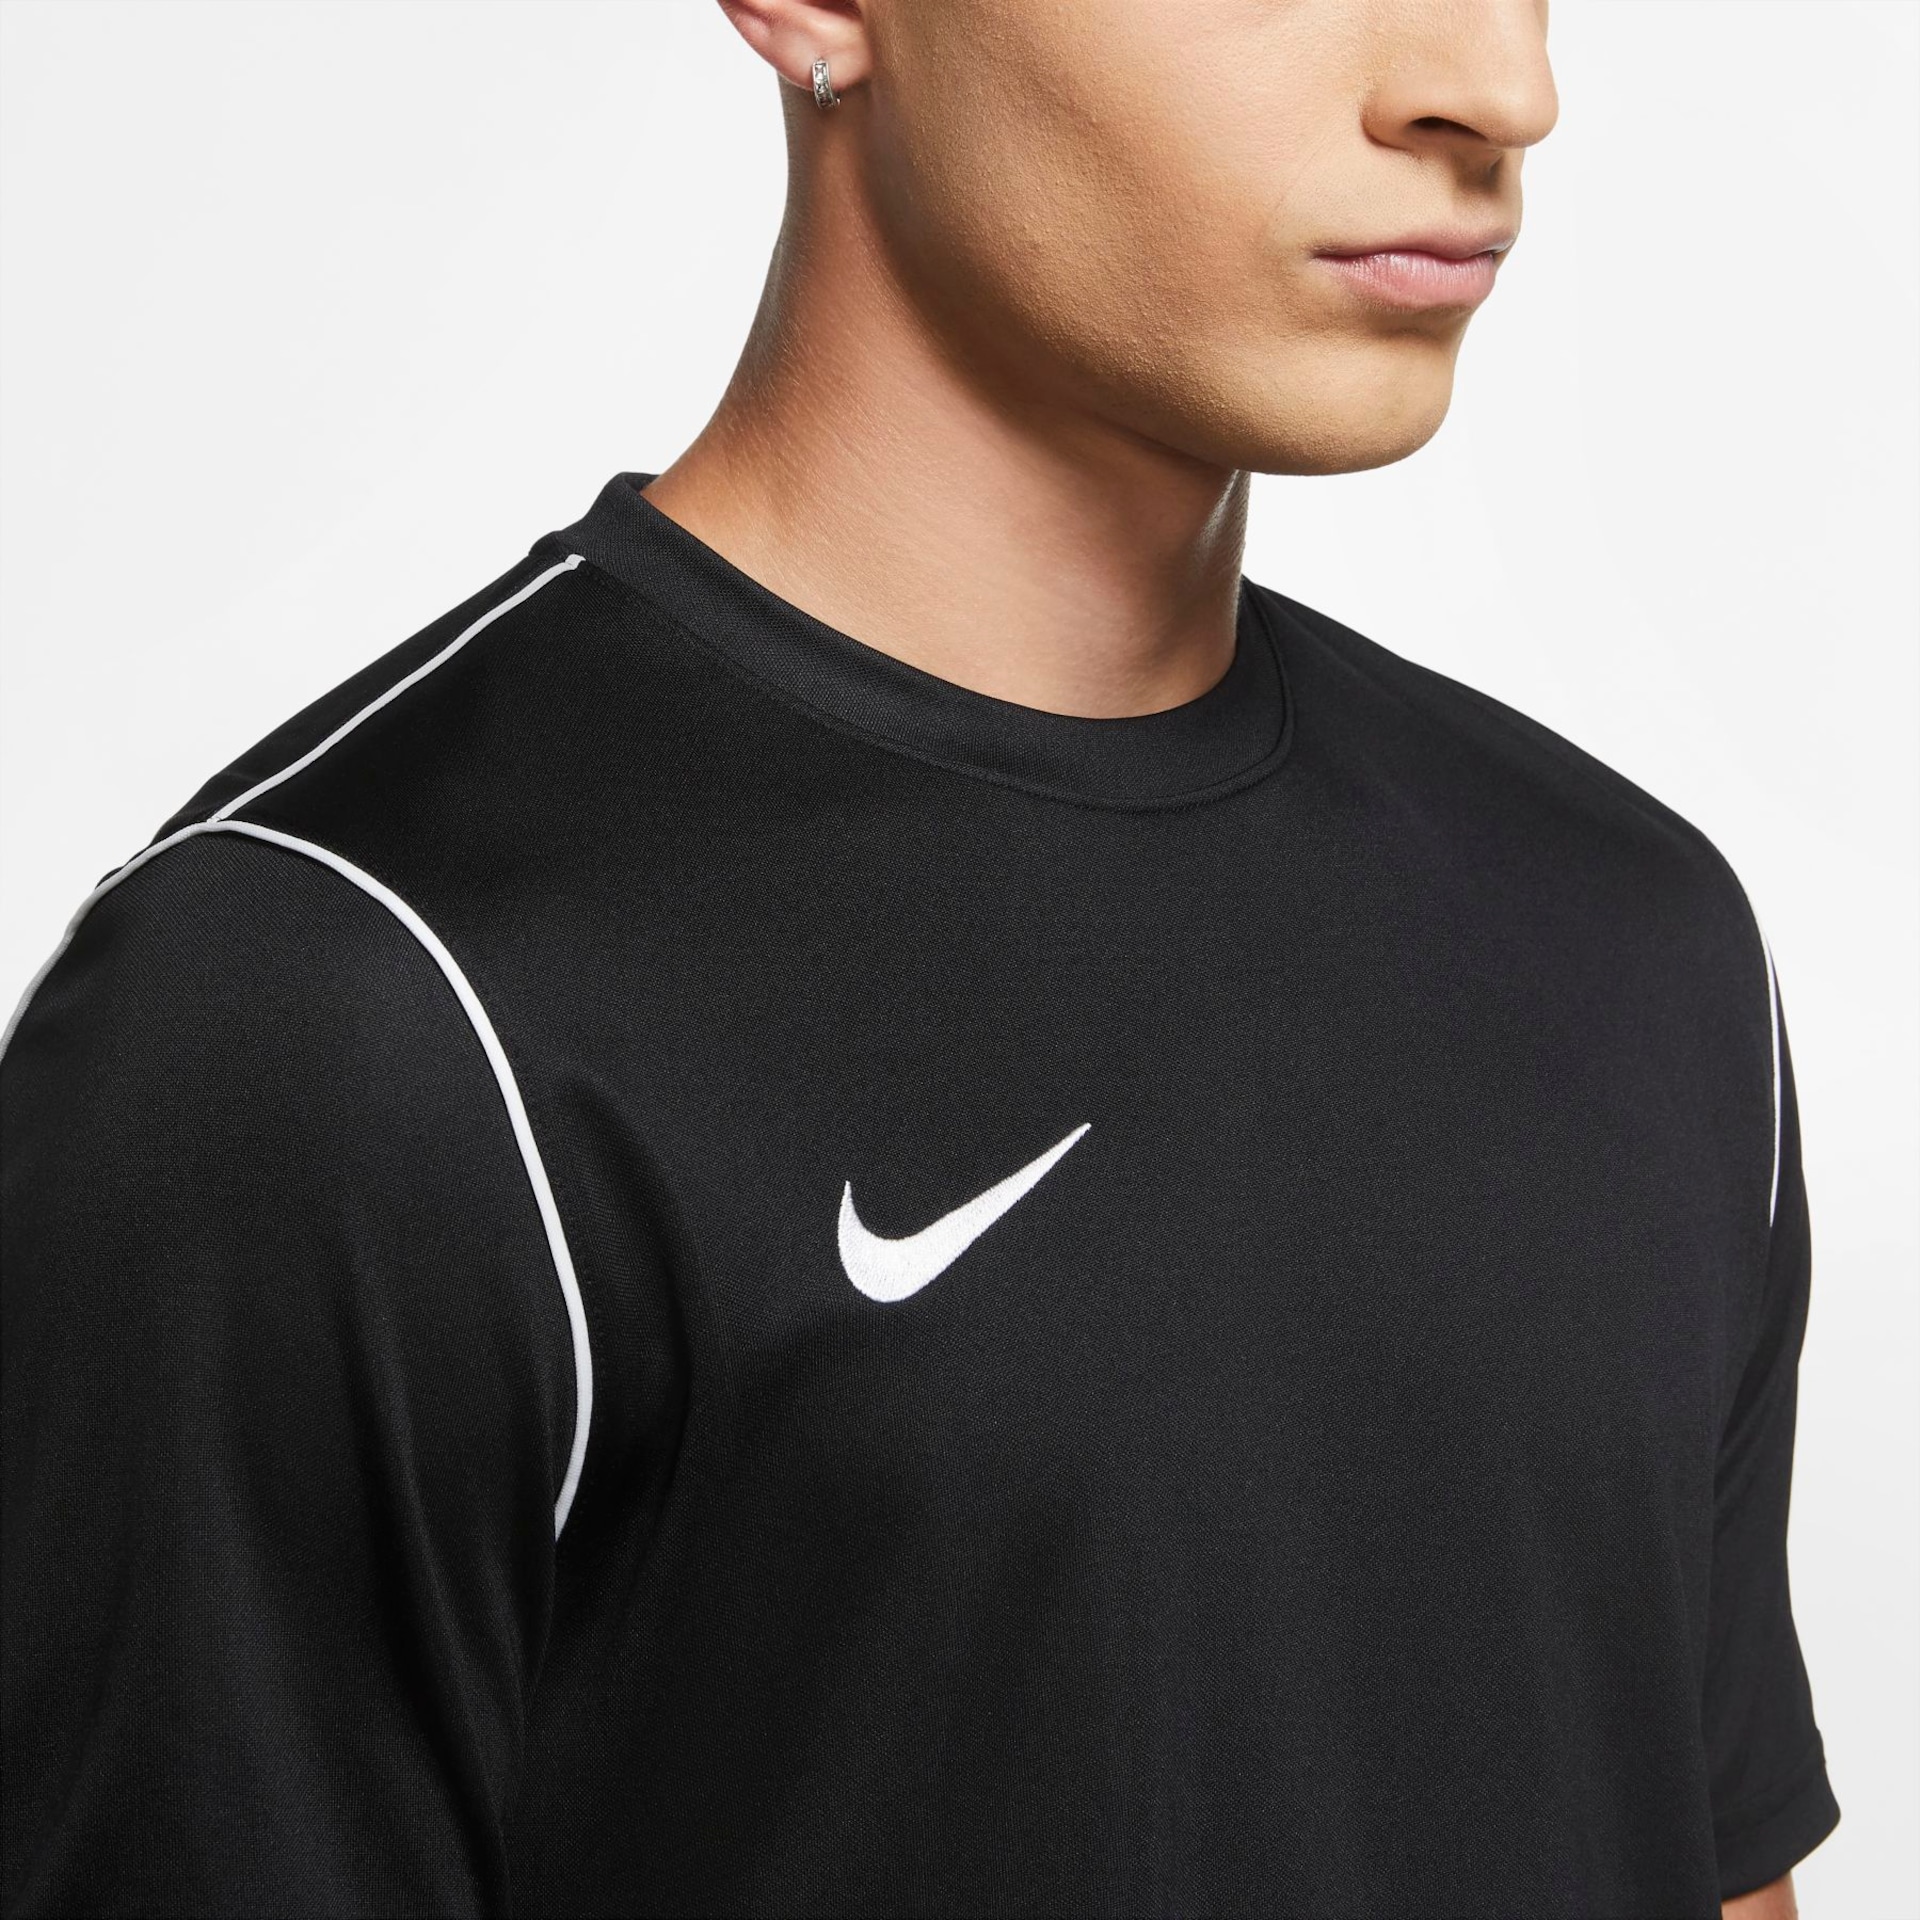 Camisa Nike Dri-FIT Uniformes - Foto 3